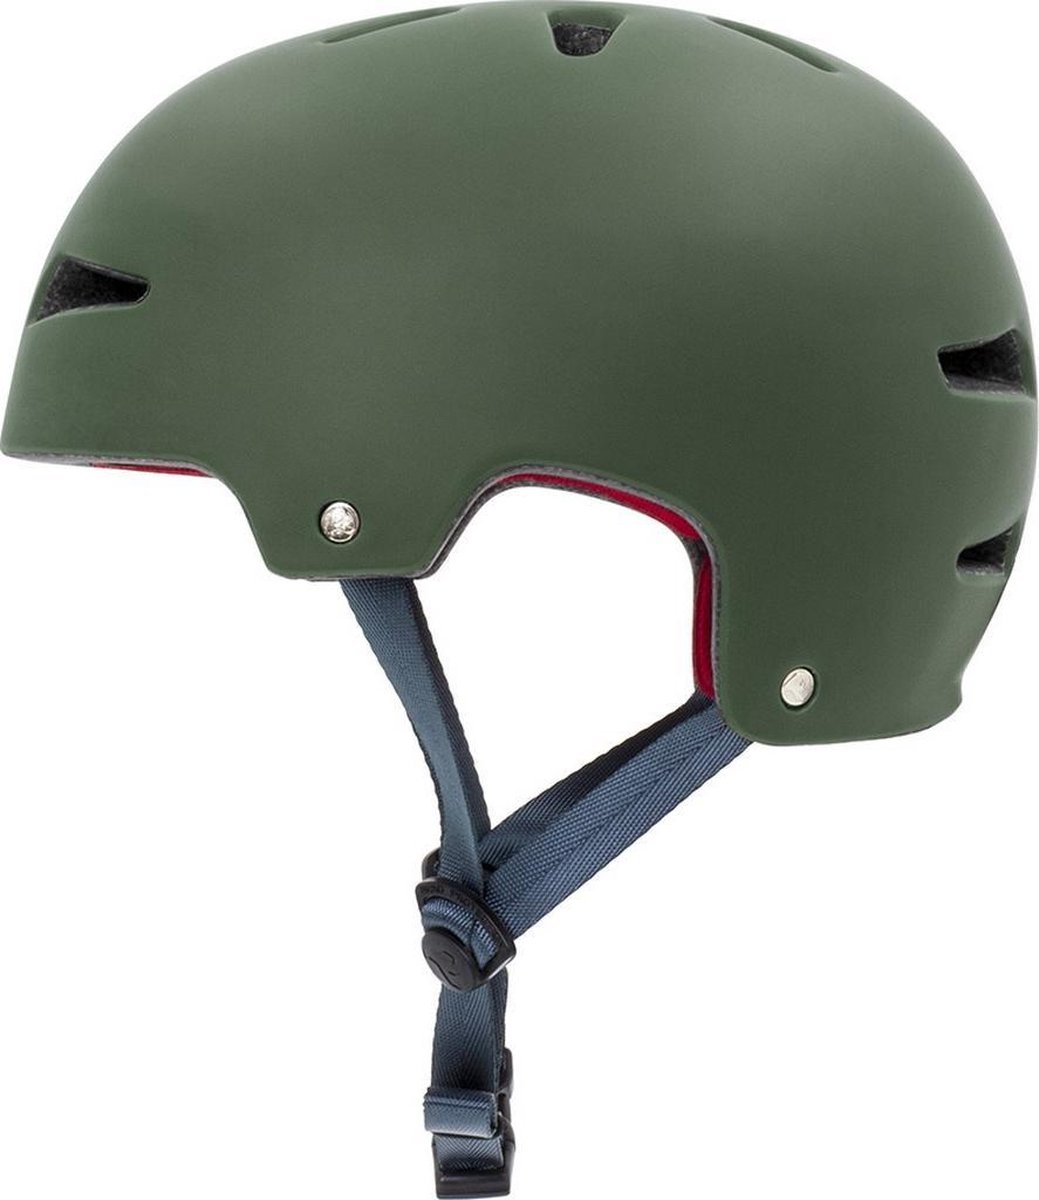 Rekd Helm Ultralite Matgroen Maat L/xl 57-59 Cm